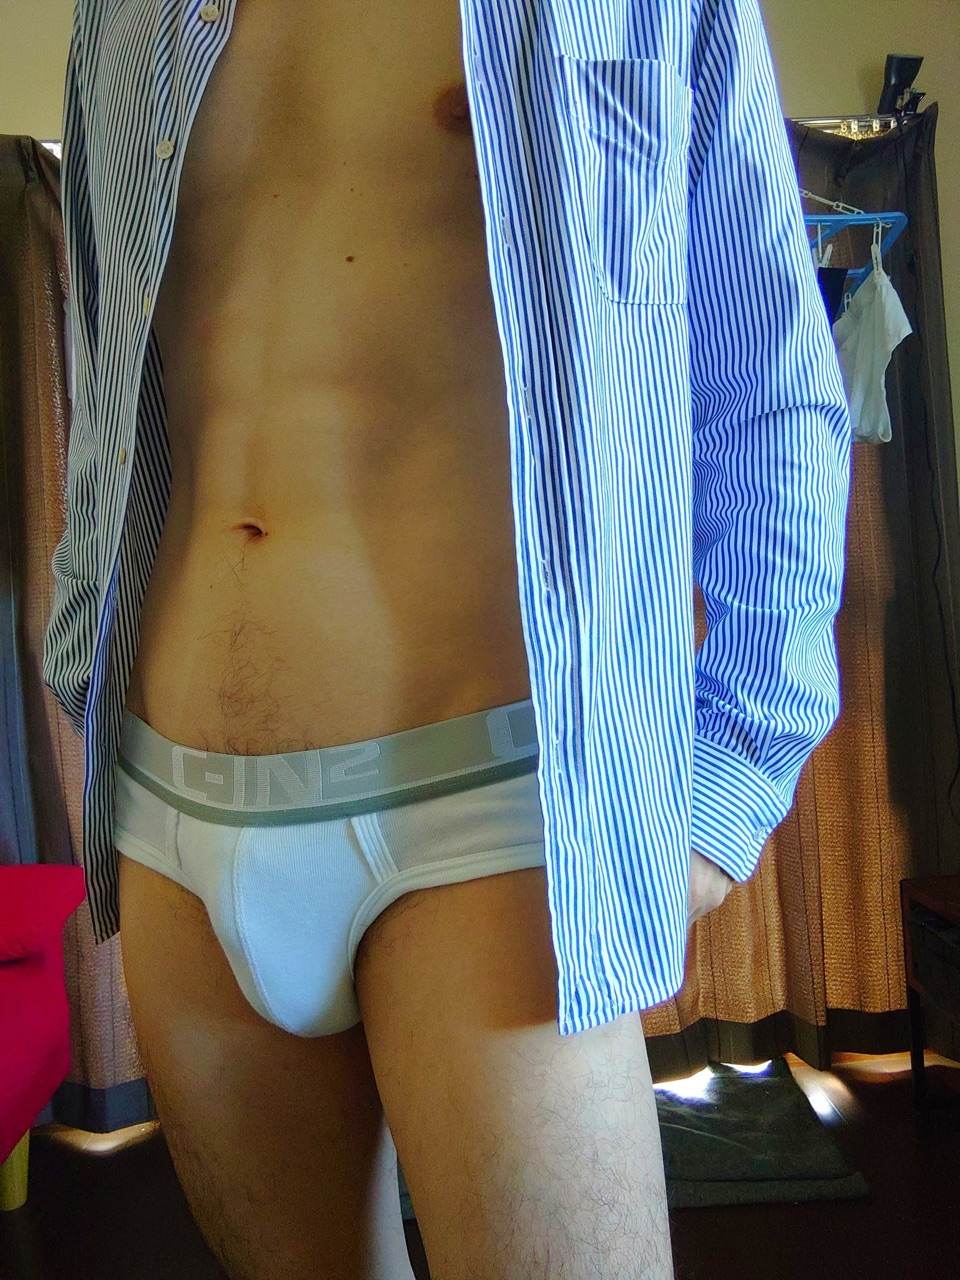 Hot men in underwear 484